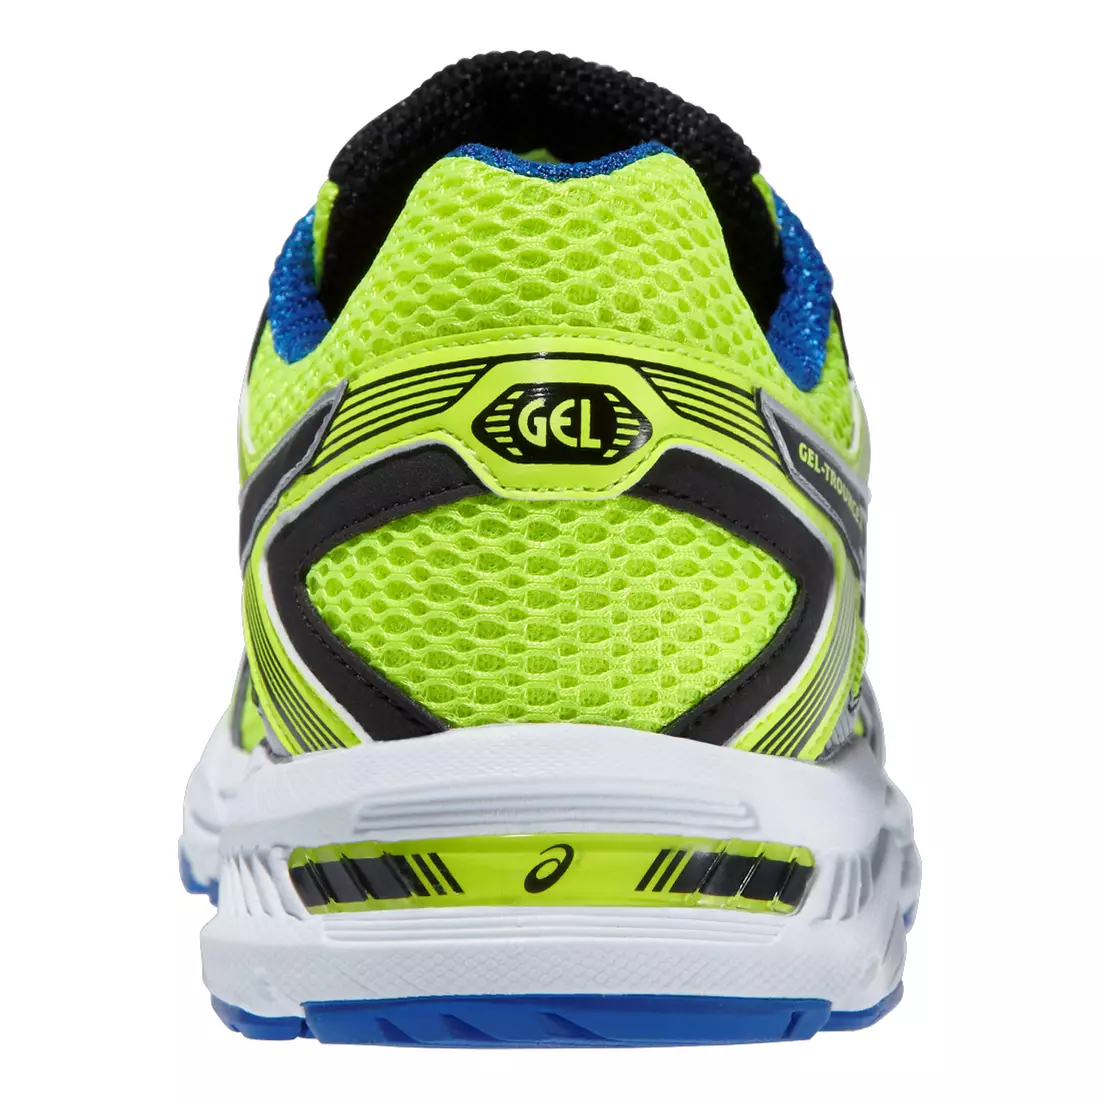 ASICS GEL-TROUNCE 2 running shoes 0790